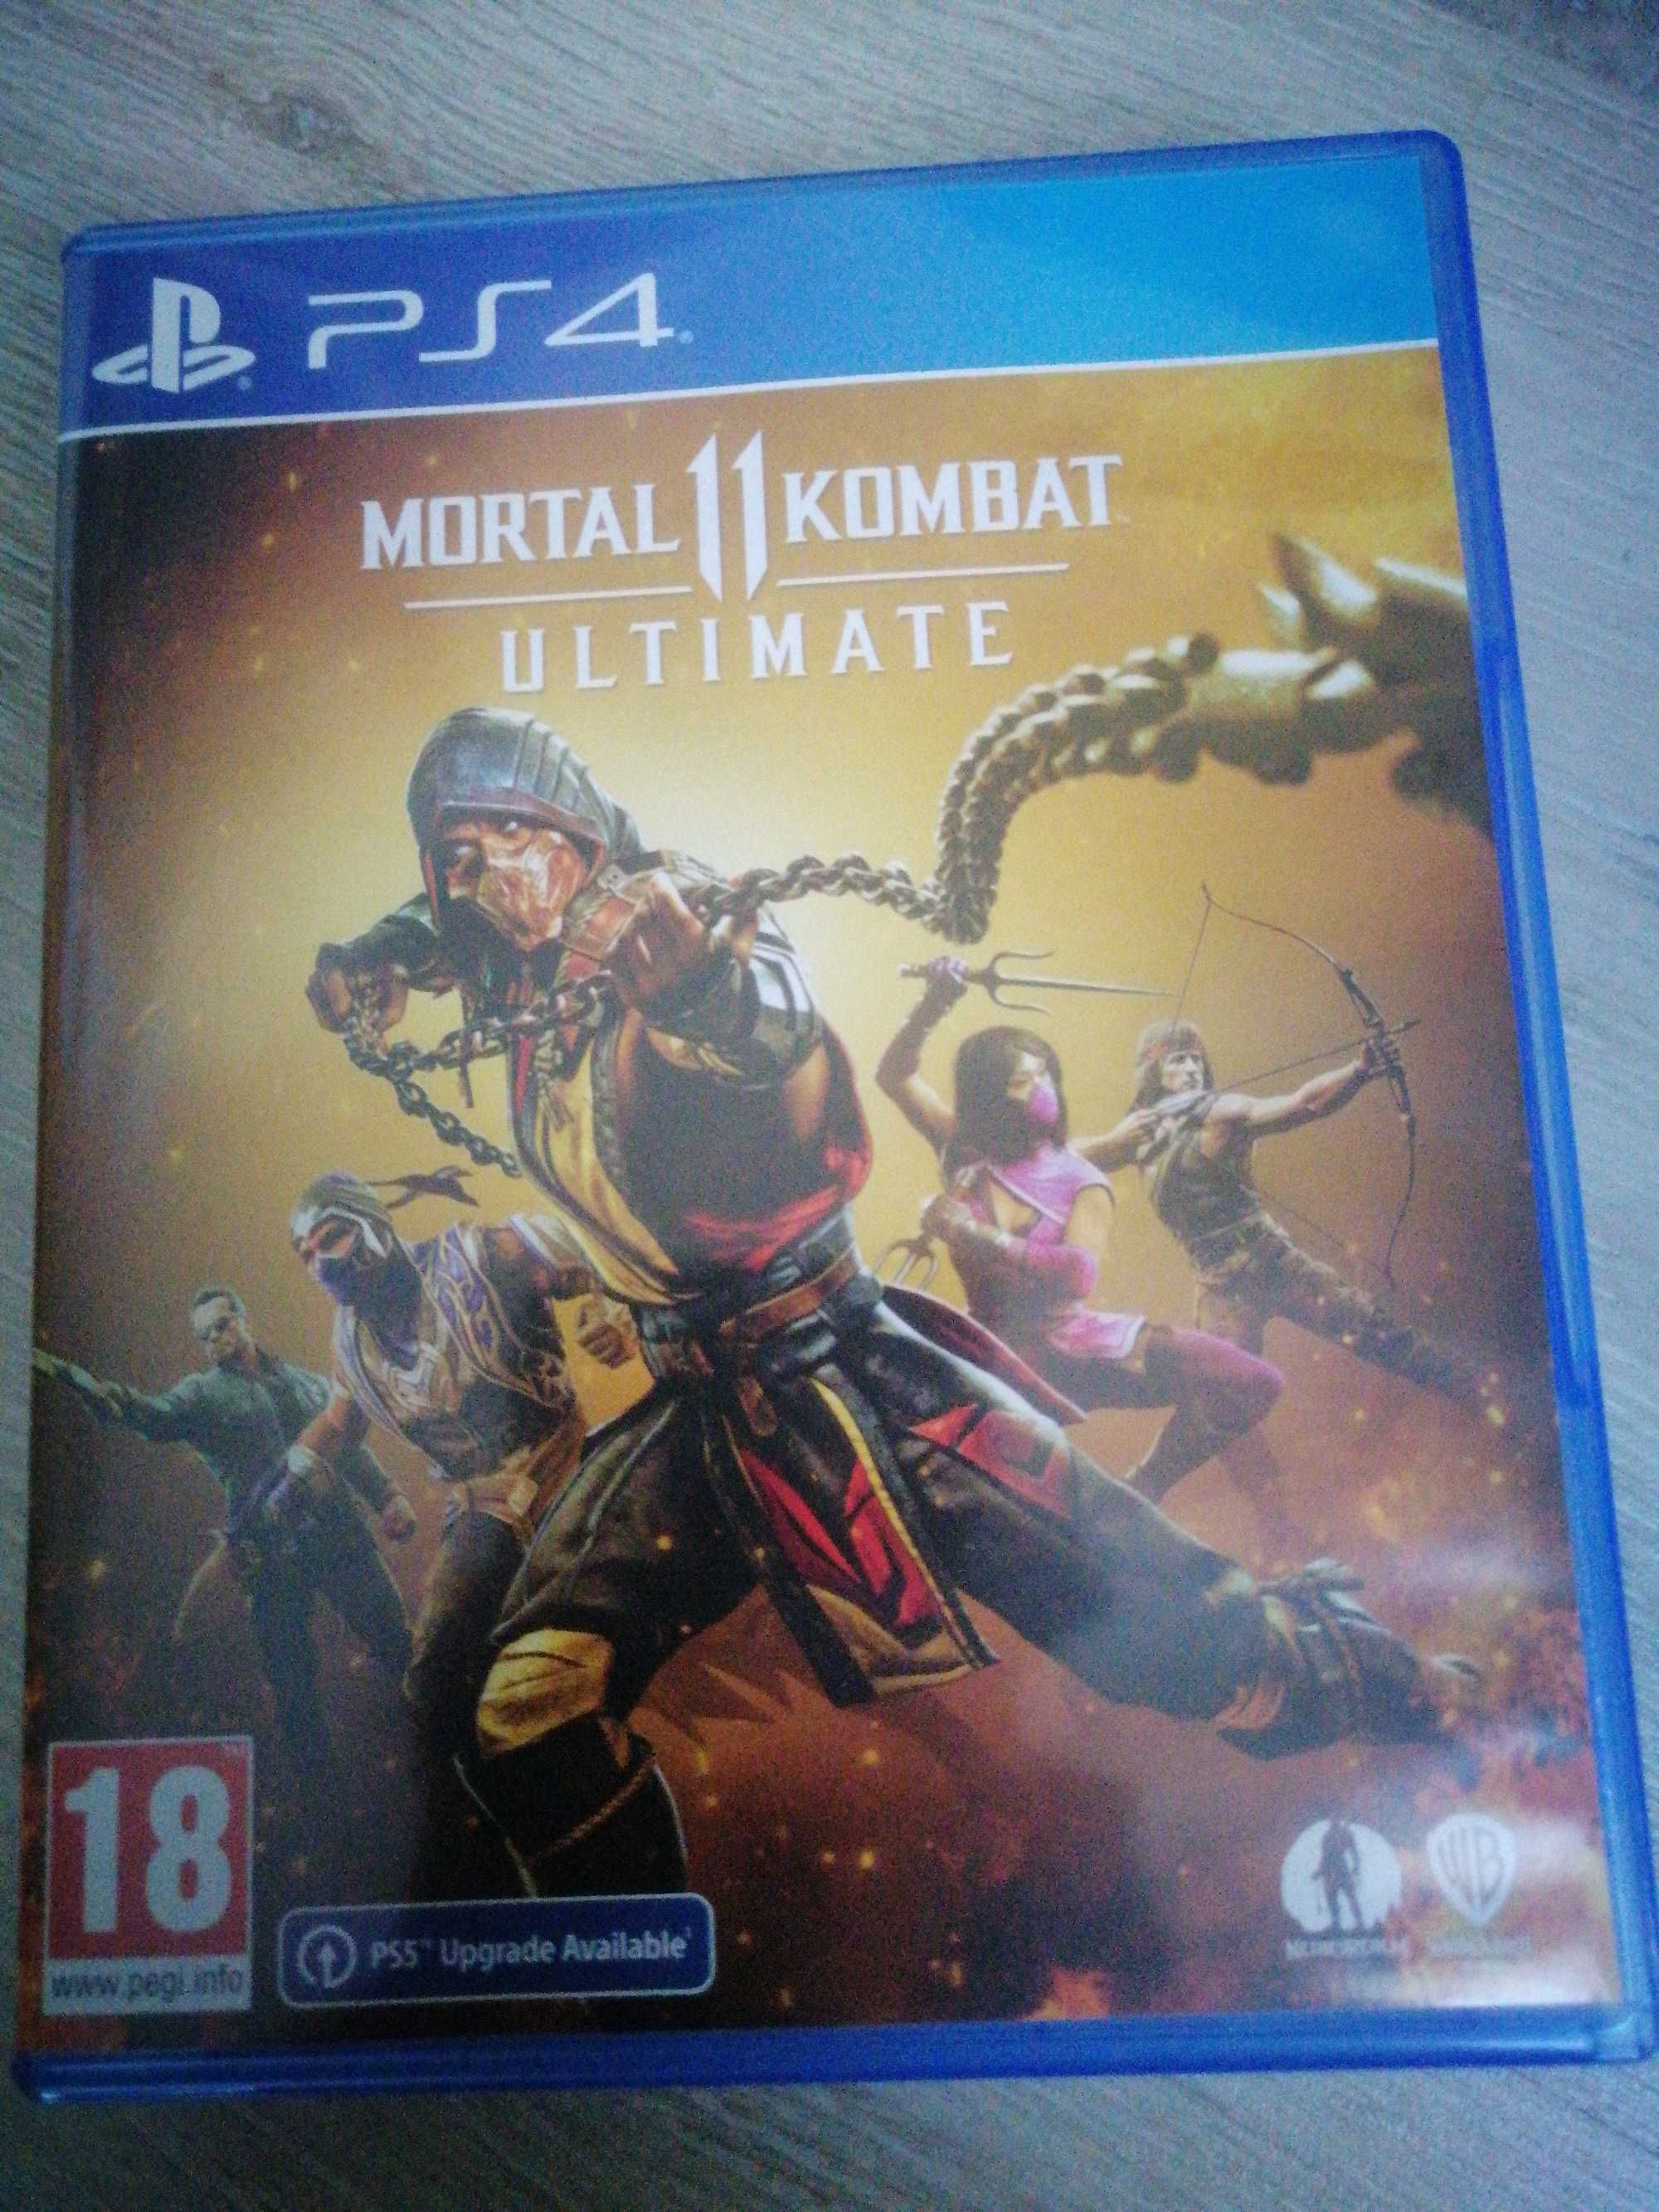 PS4 Pro с Mortal Kombat10, Mortal Kombat11 ultimate и GTA 5.